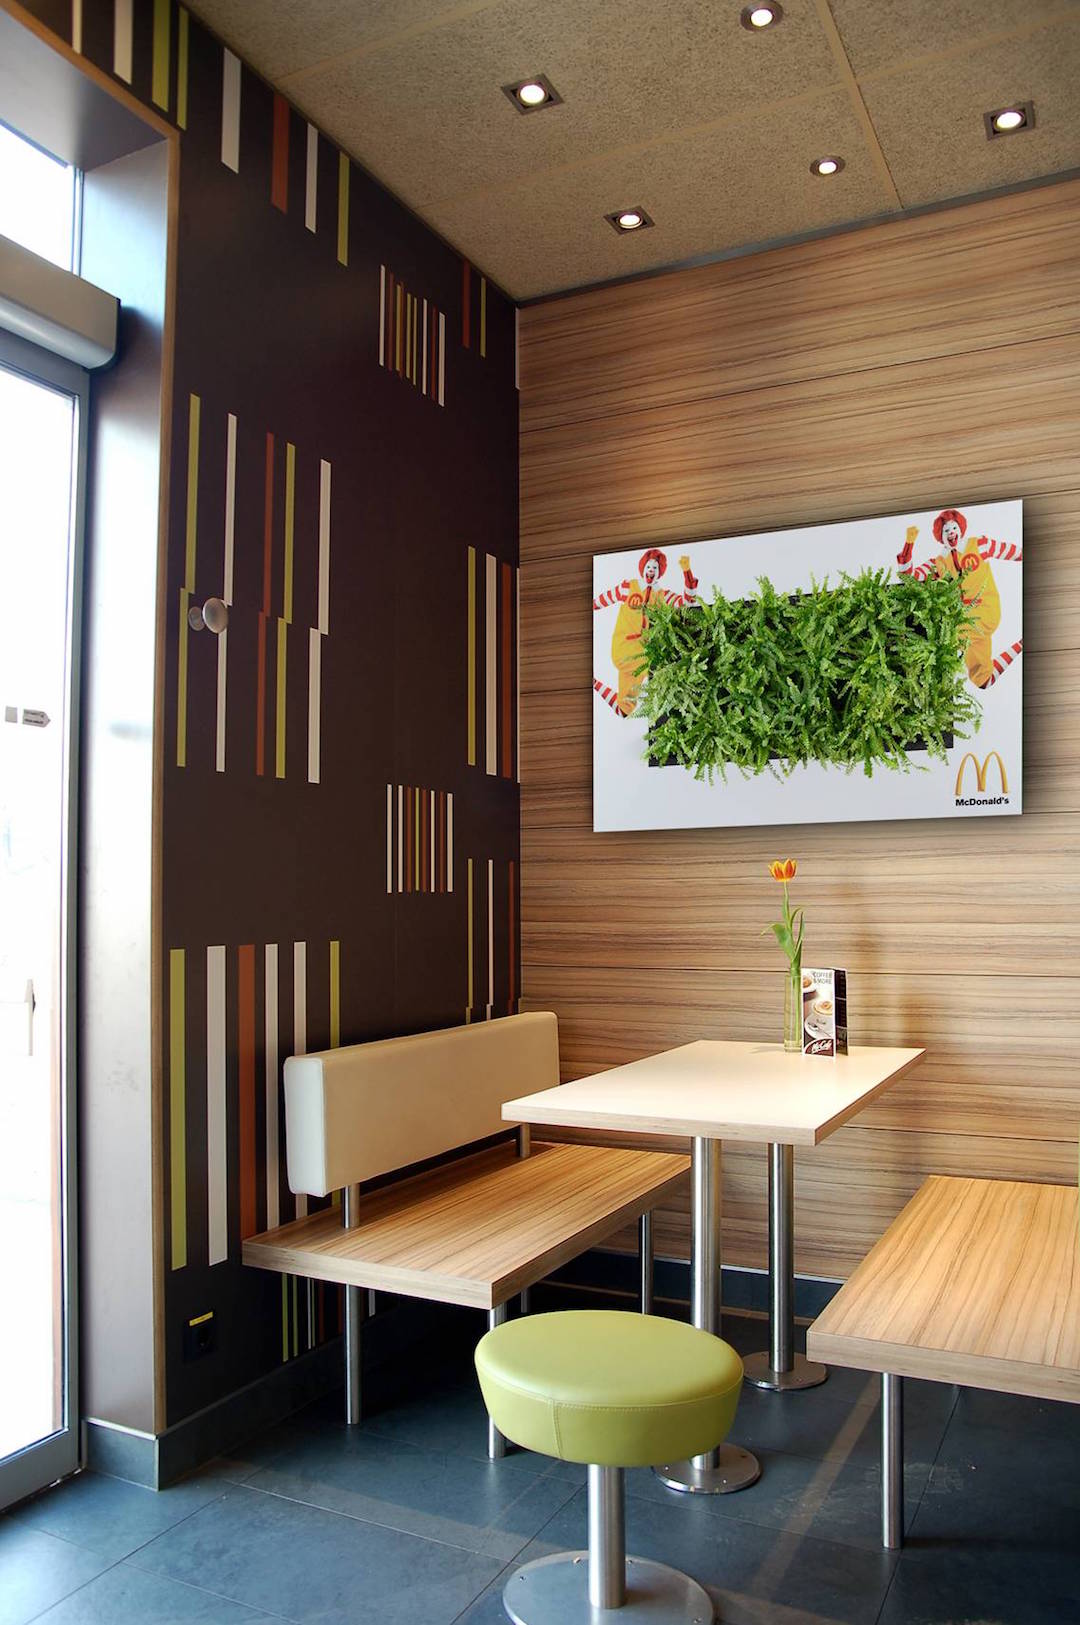 Living plant installation at a McDonald's restaurant